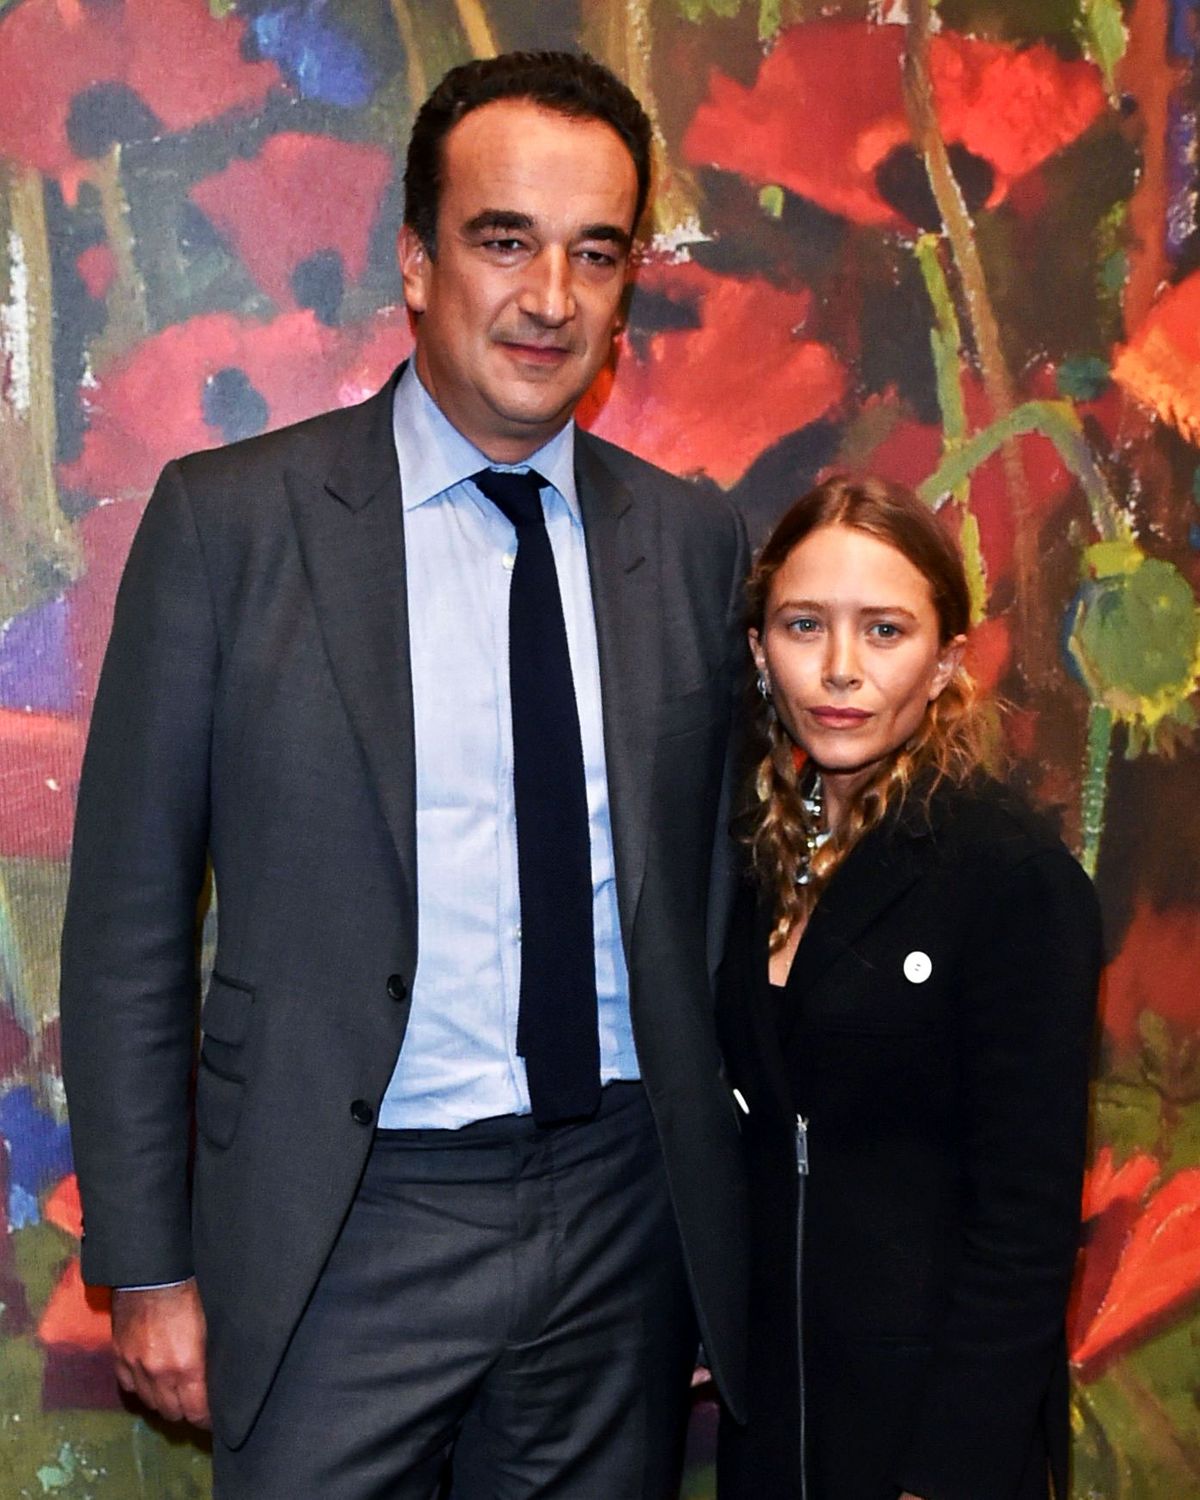 rabat Arbejdsgiver Uretfærdighed Mary-Kate Olsen and Olivier Sarkozy Divorce; Source Blames Her Immaturity -  The Hollywood Gossip